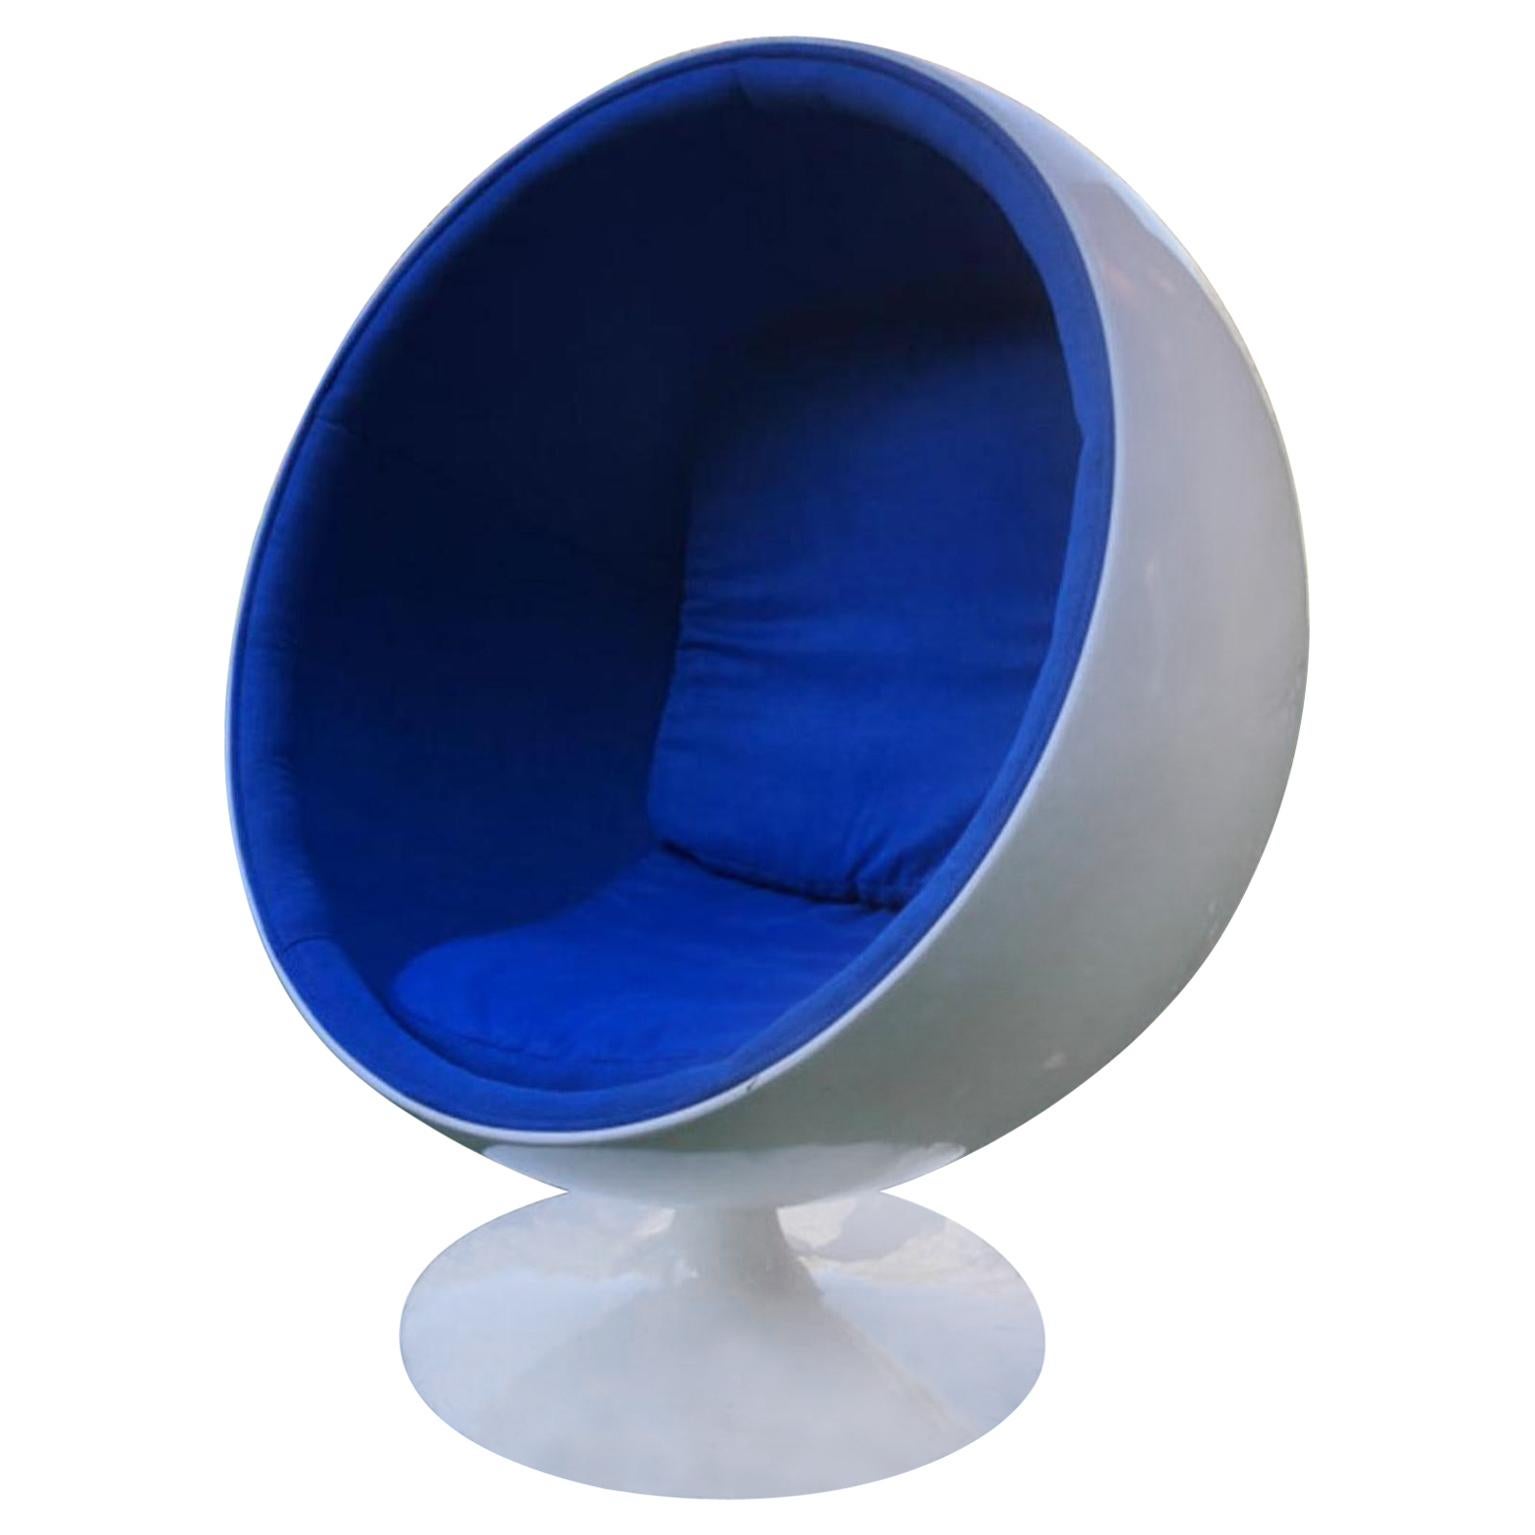 Mid-Century Modern Egg Chair